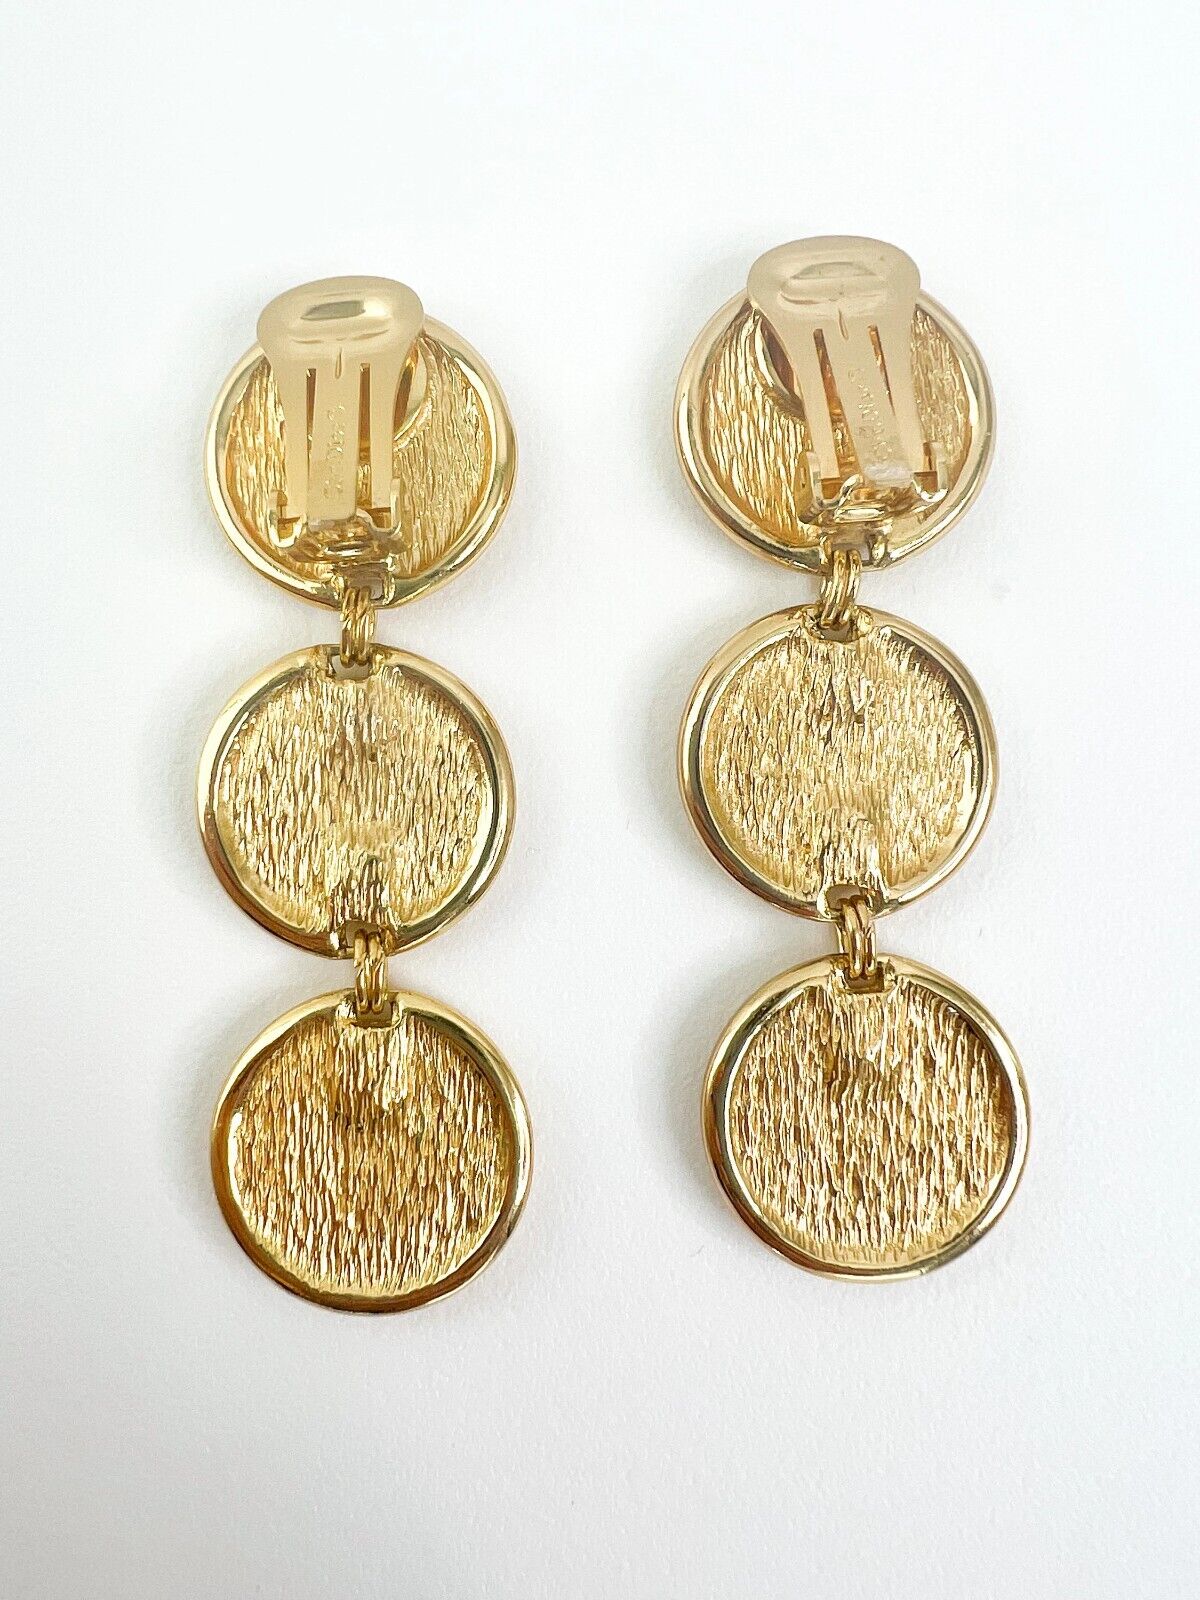 Vintage Christian Dior Earrings, Dior monogram logo Earrings, Earrings Dangle Gold, Dior Coin Drop Earrings, Earrings large gold